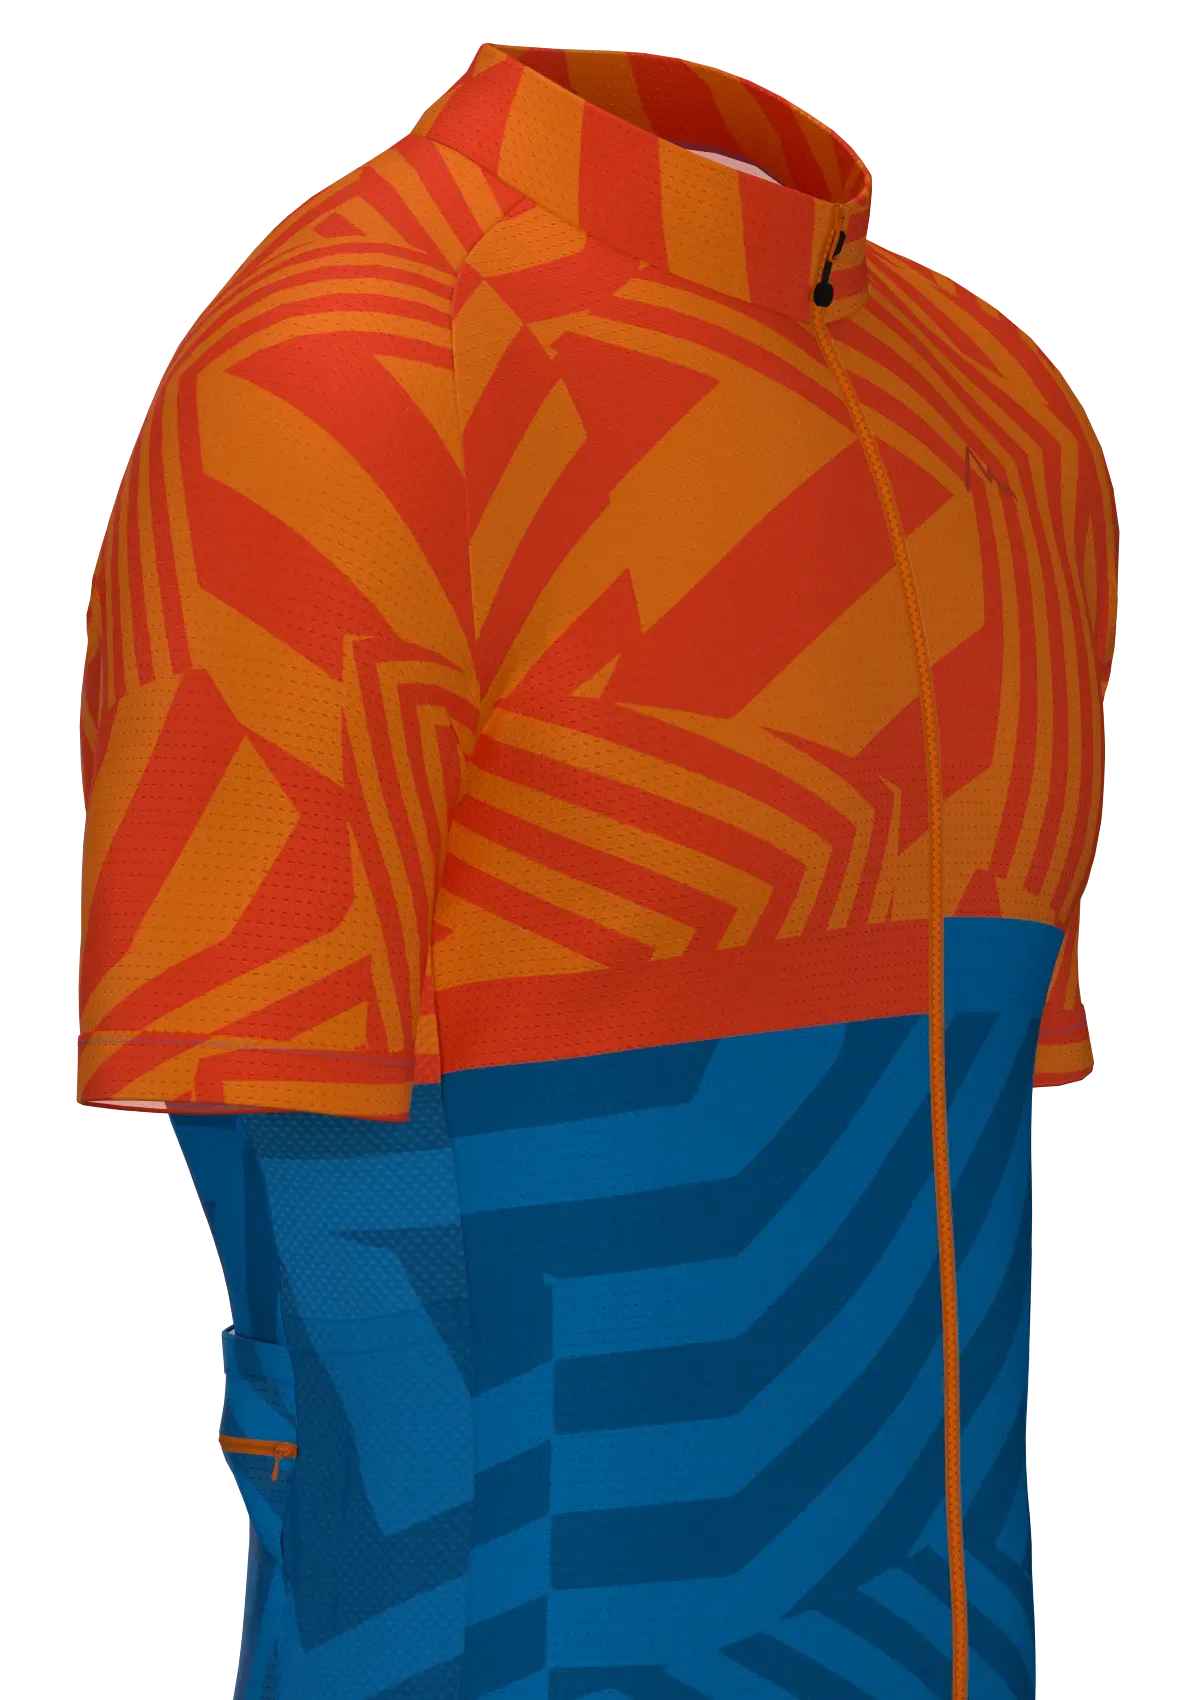 Regular orange-blue cycling jersey